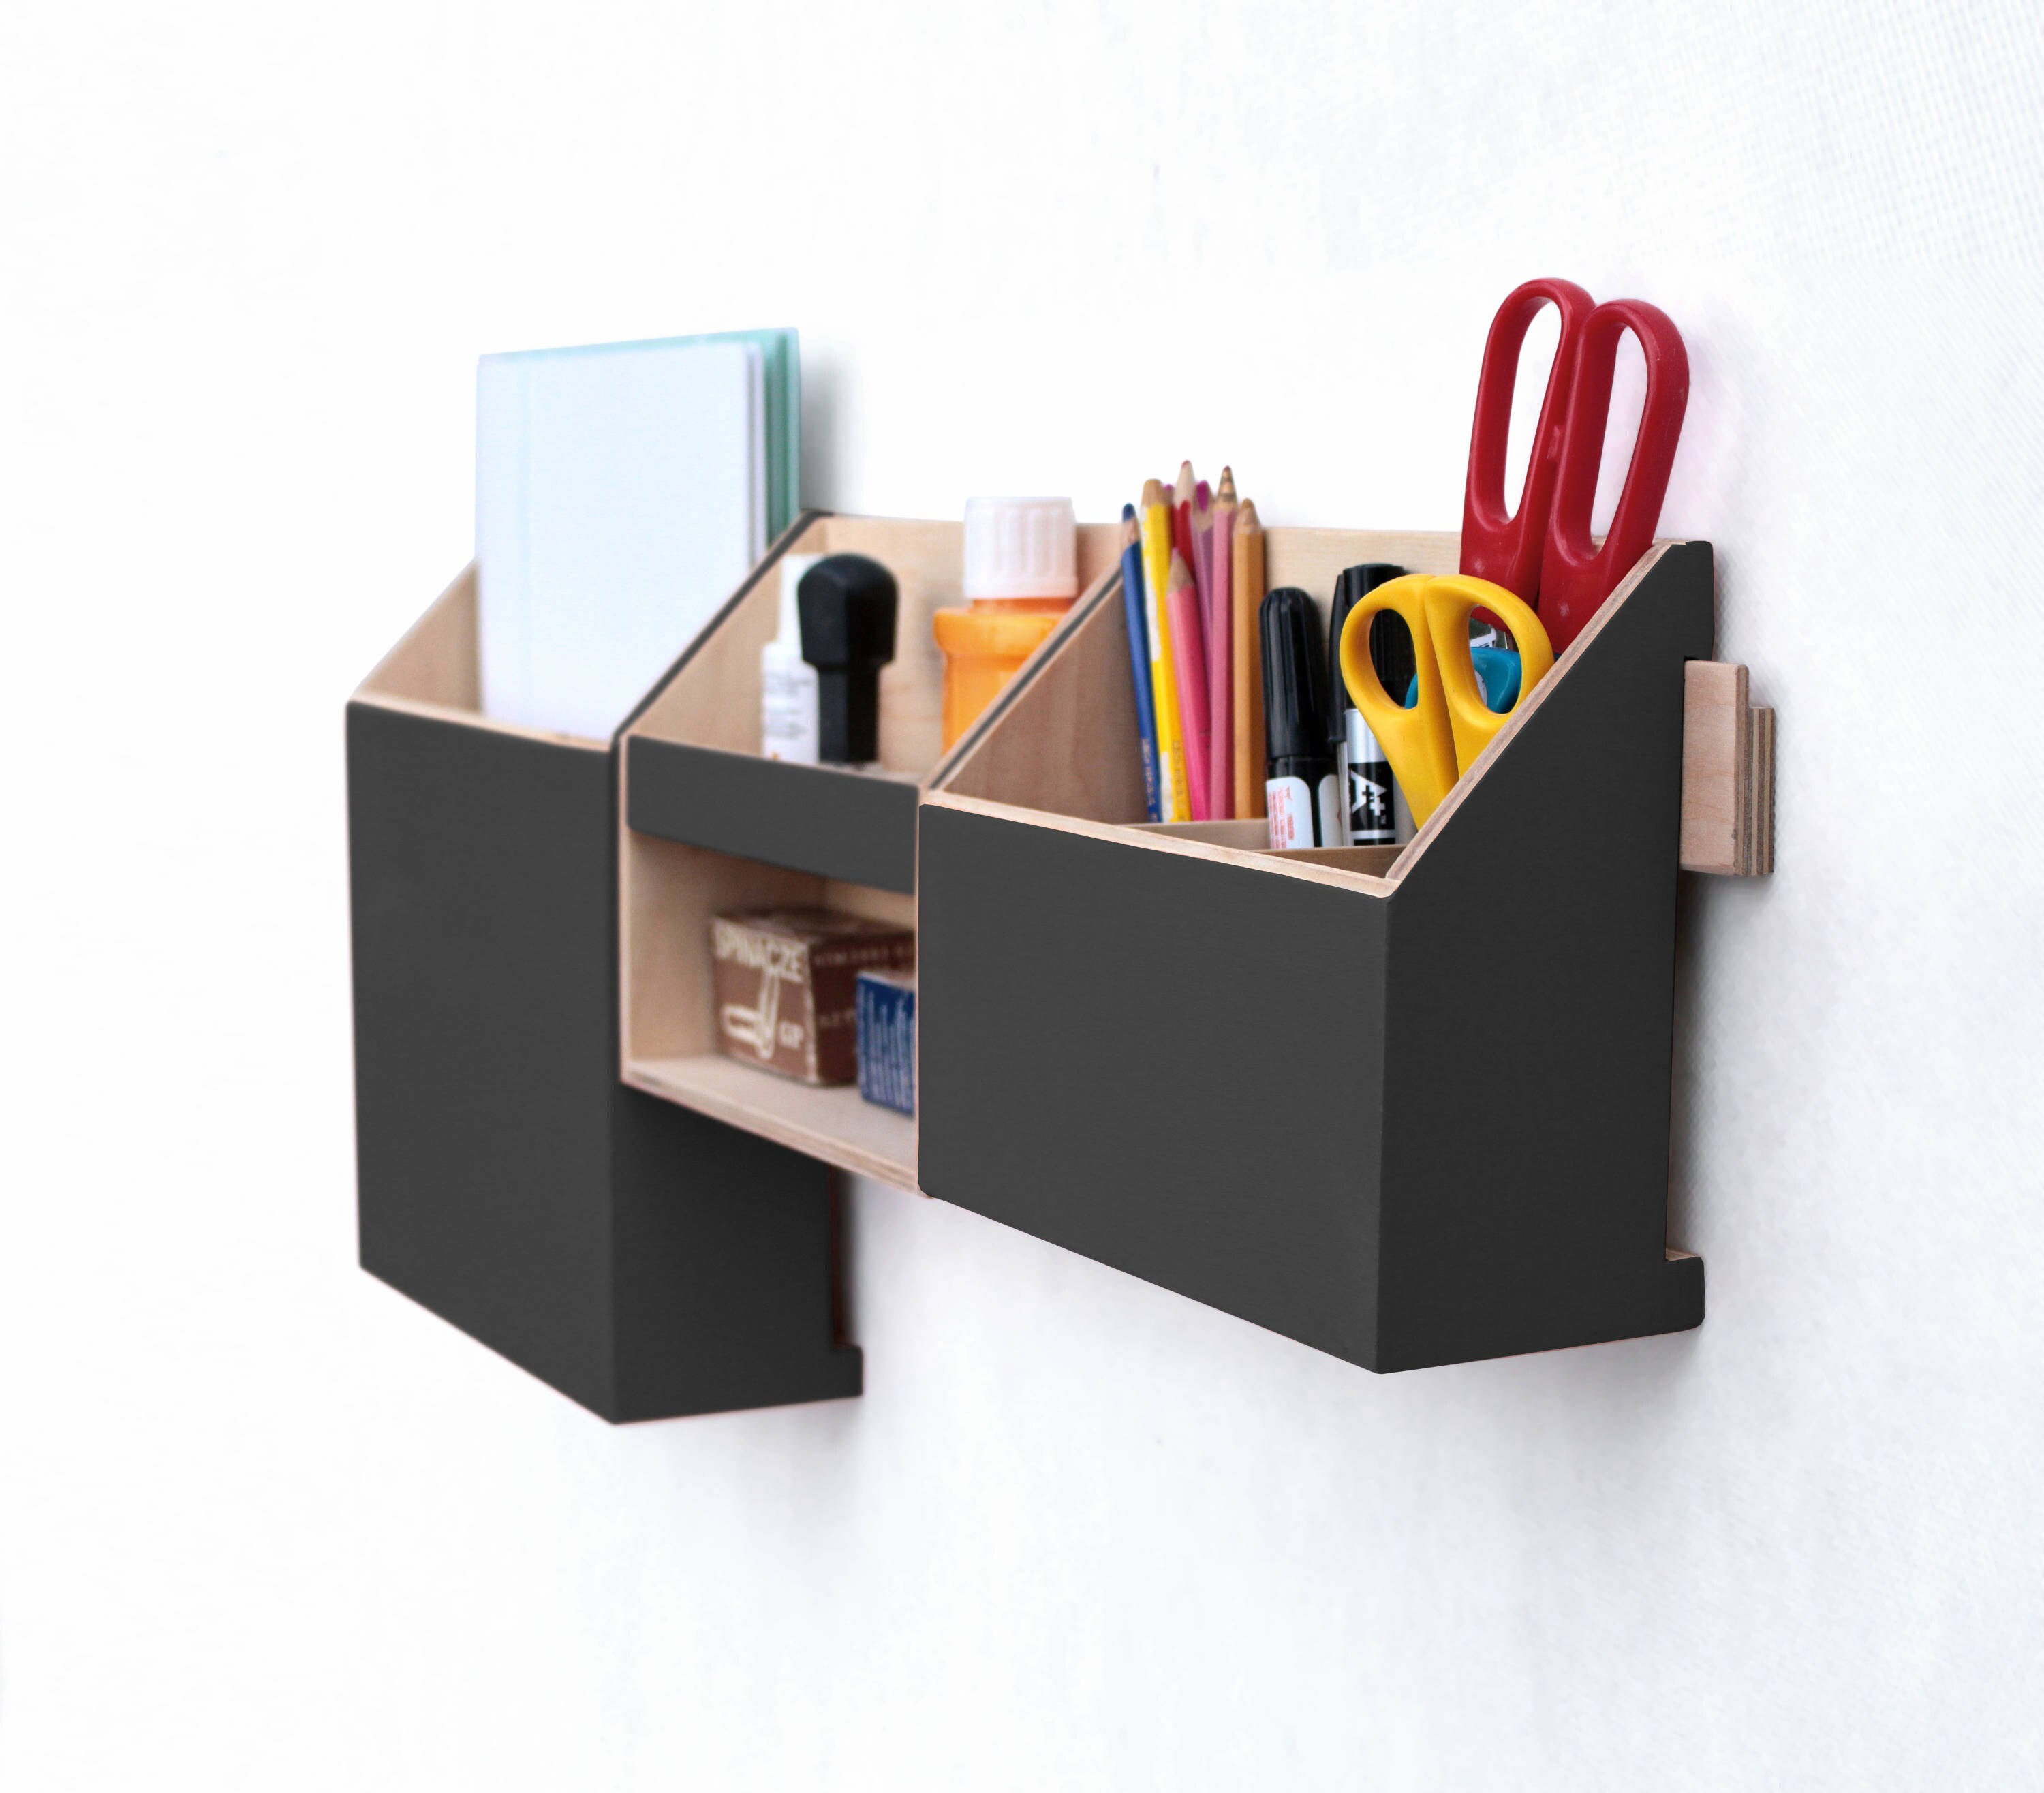 Wood Black, Acrylic paint Center, 0ffice desk accessories, Mail Organizer, Pen holder, Desk organizer office set